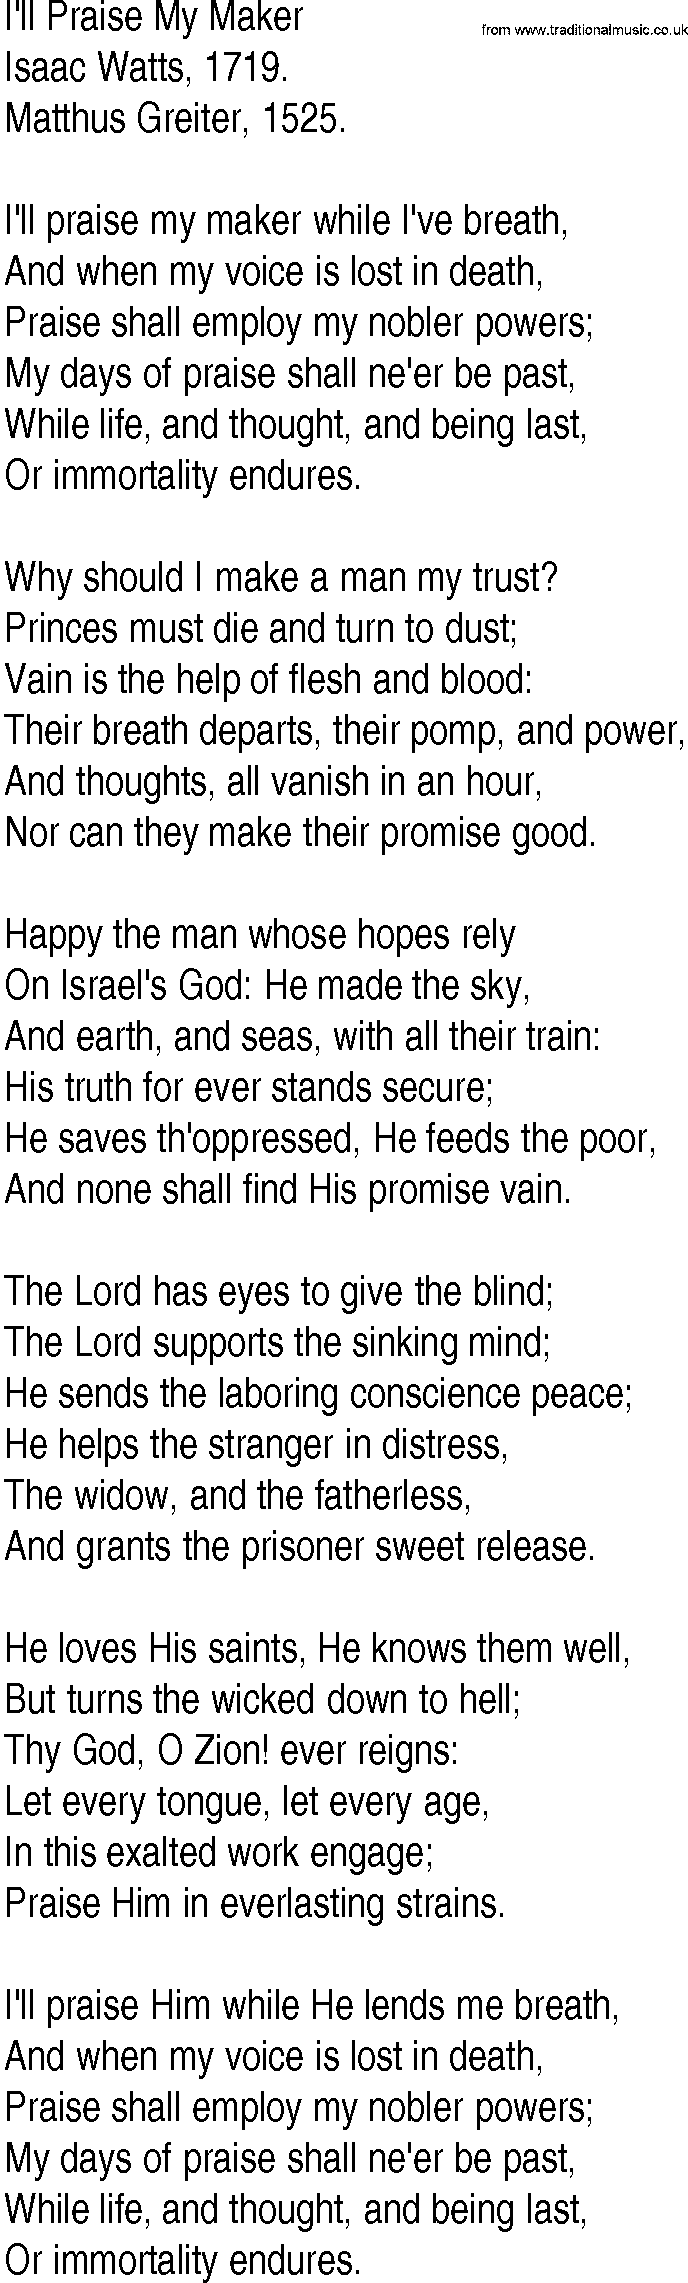 Hymn and Gospel Song: I'll Praise My Maker by Isaac Watts lyrics